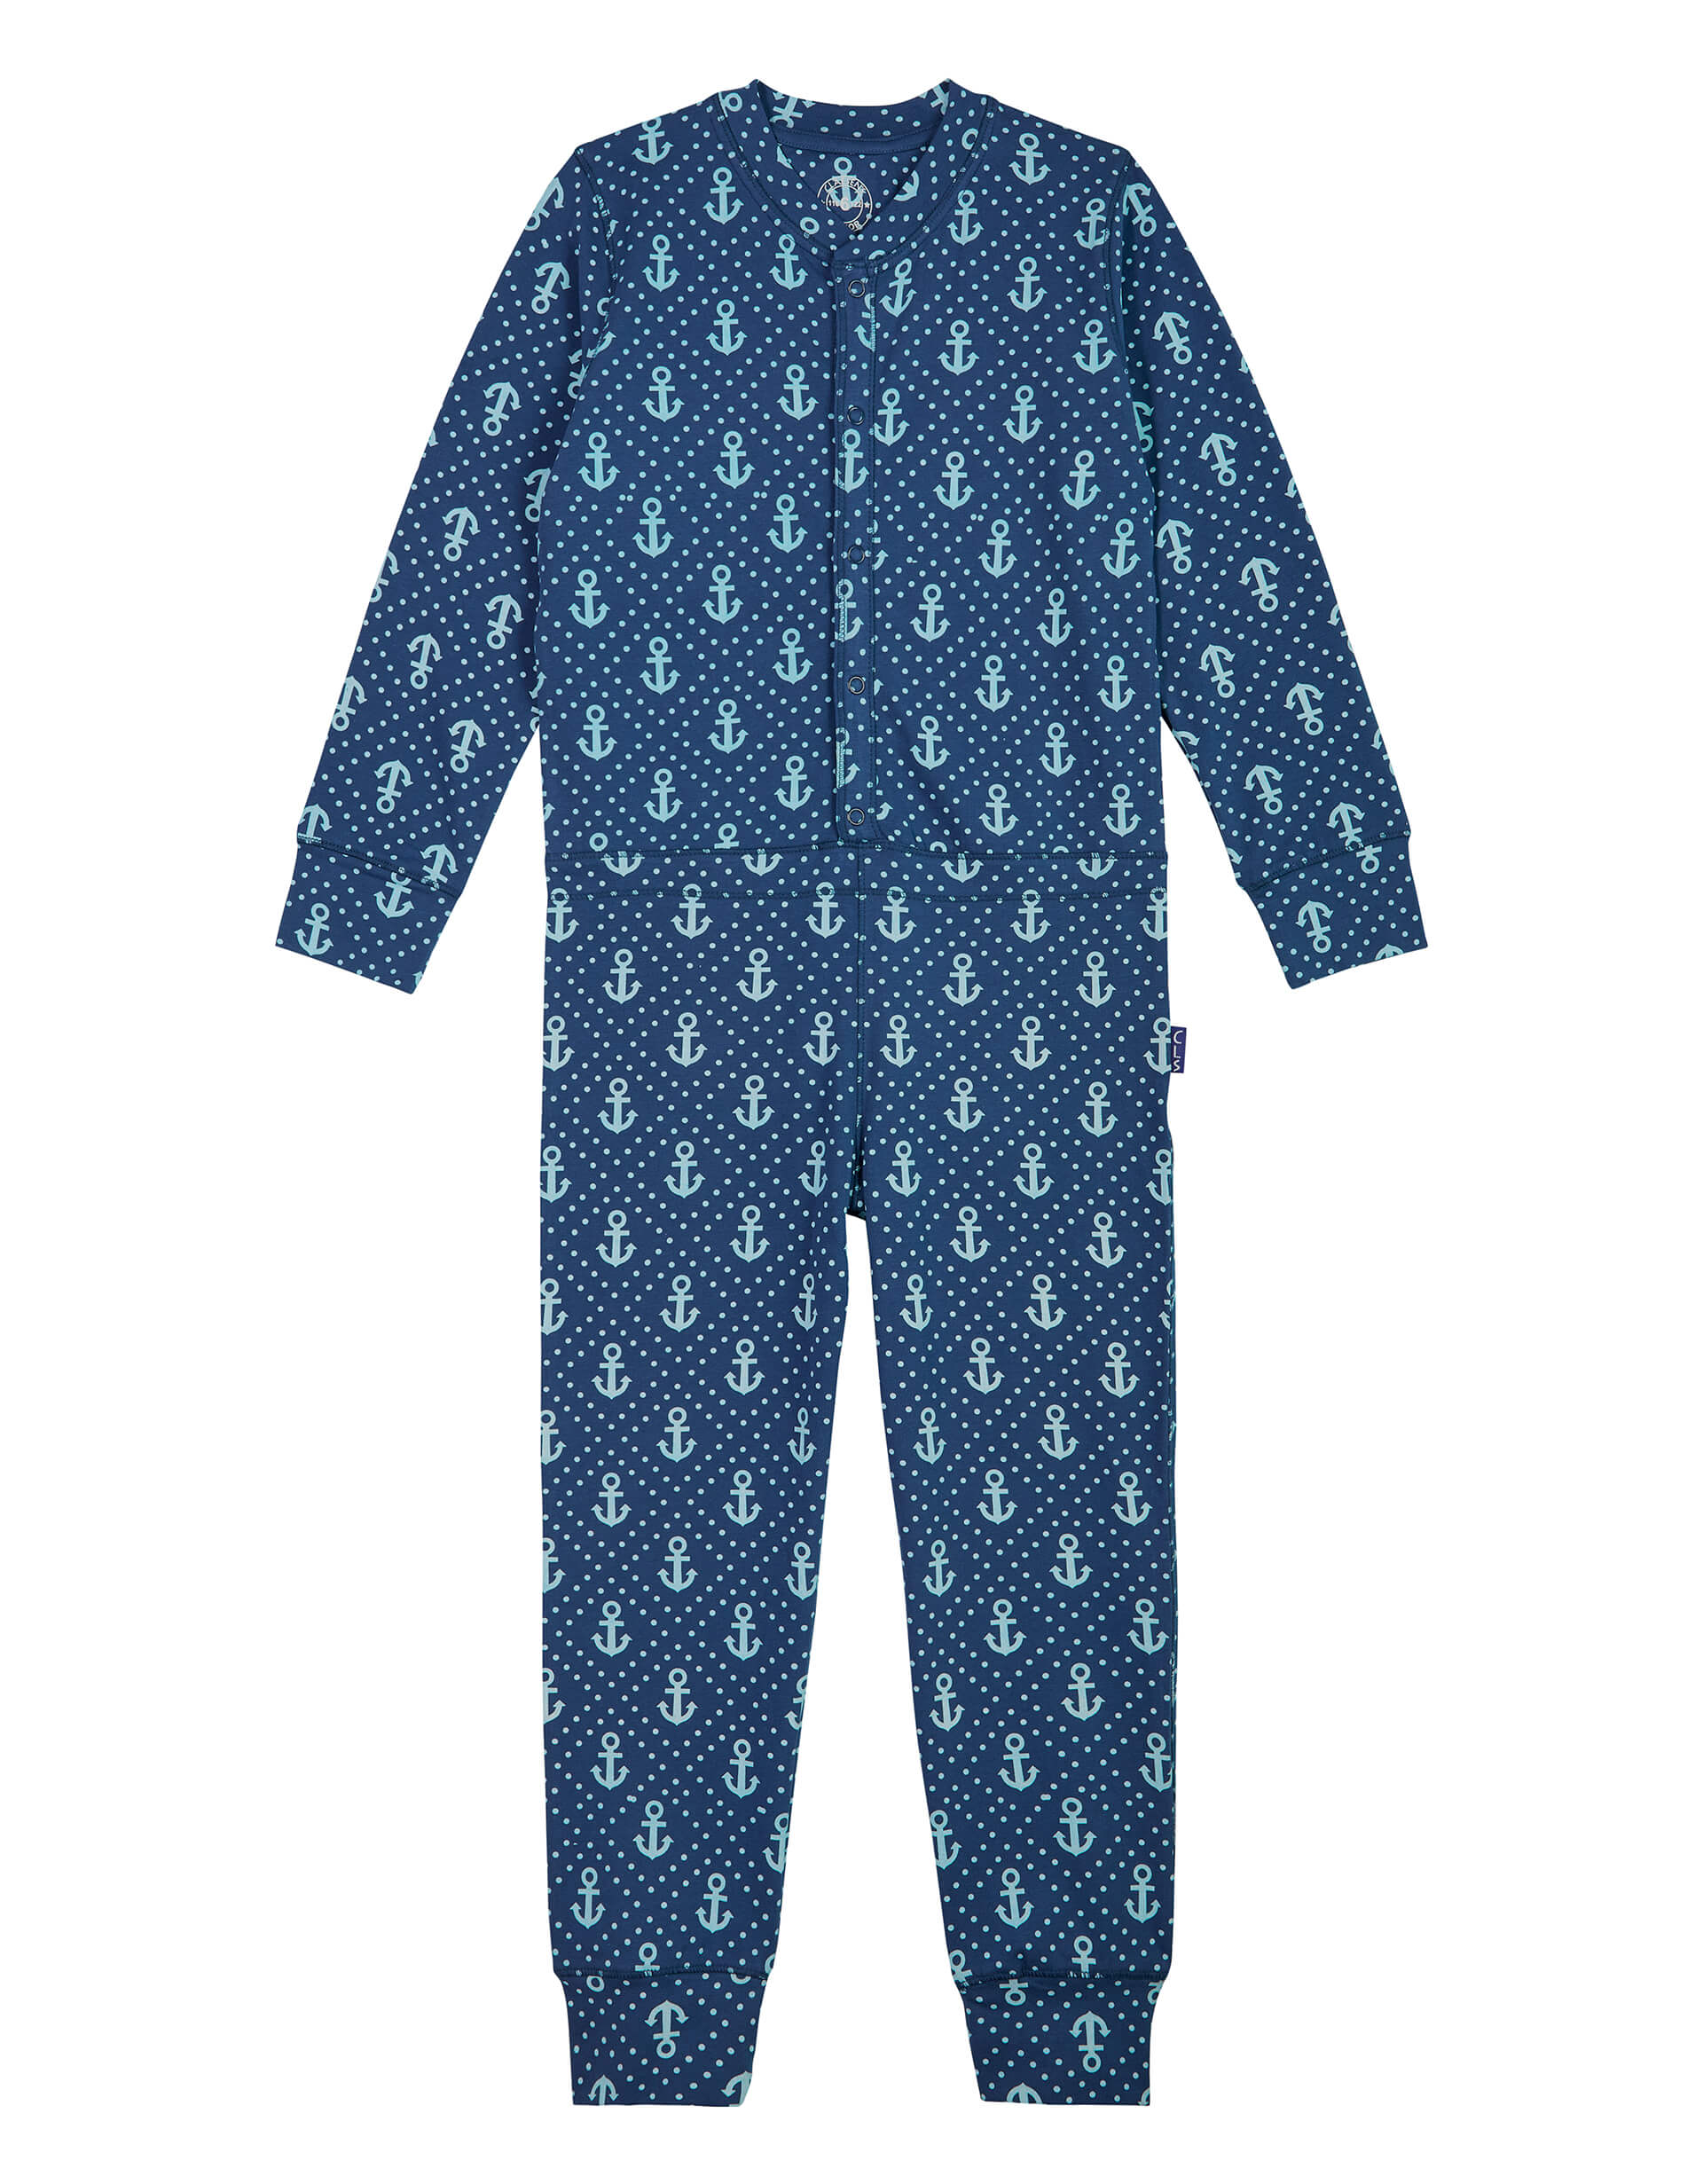 Boys Pyjama Suit